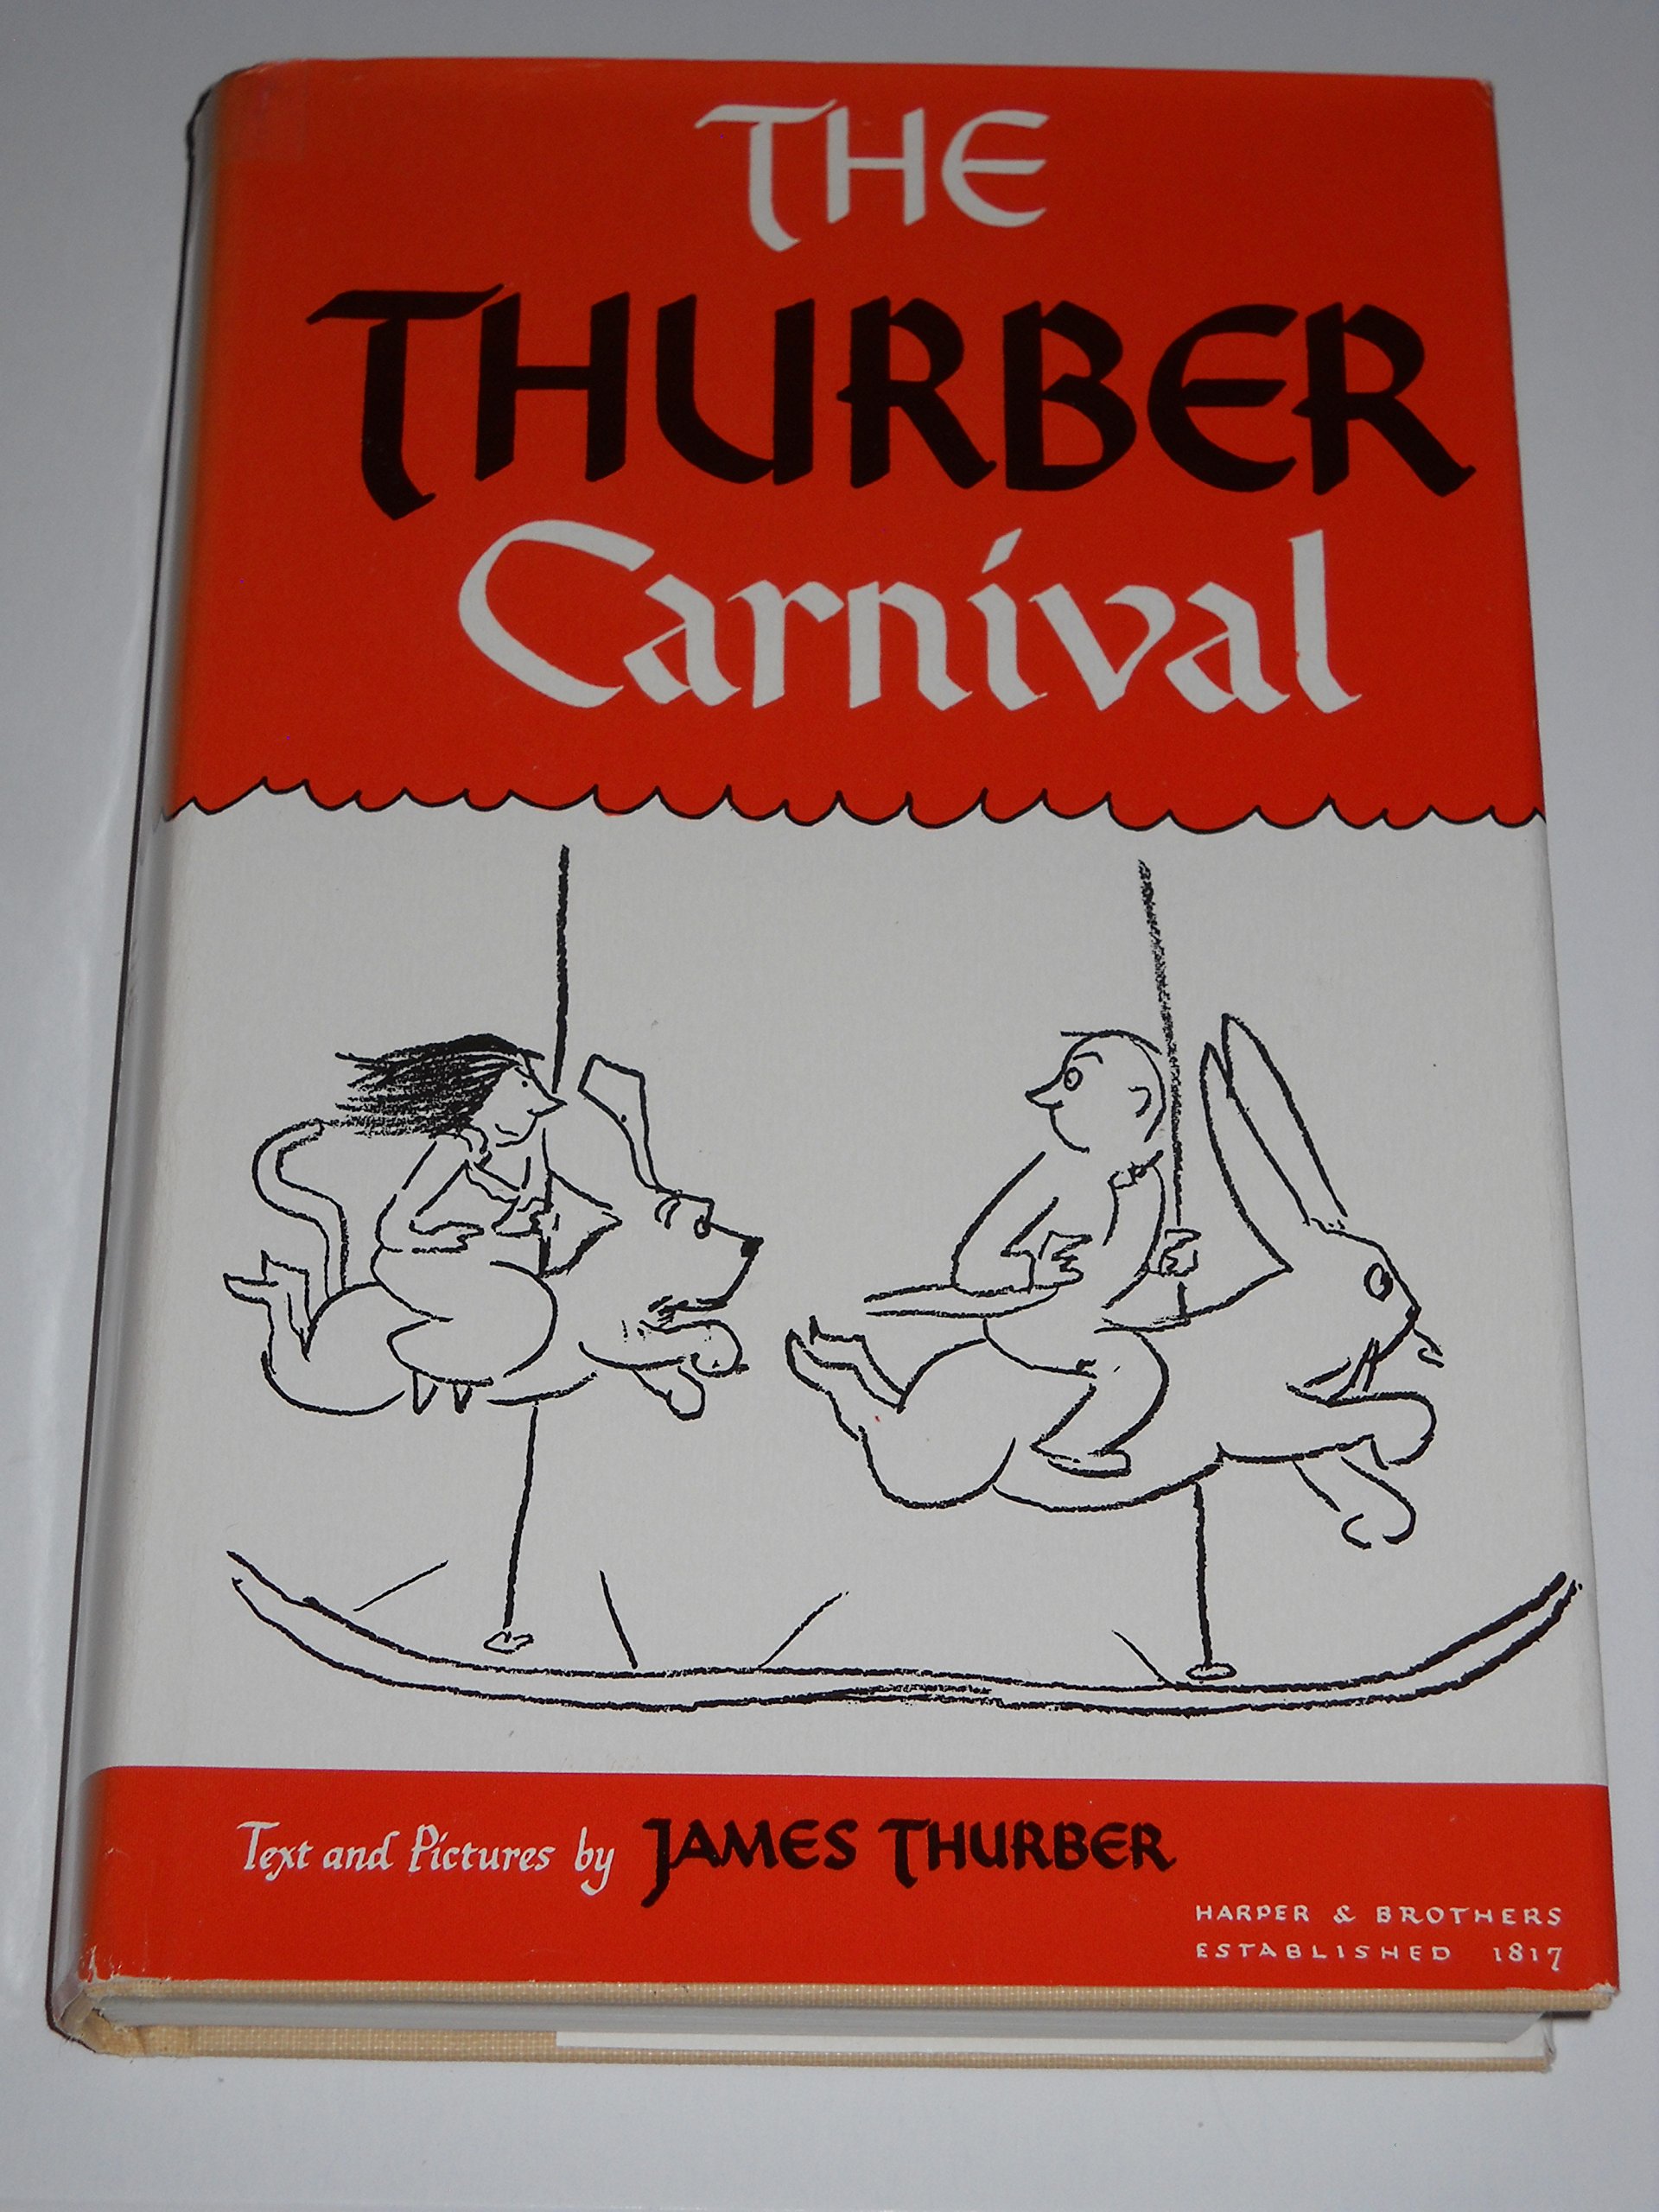 A Thurber Carnival